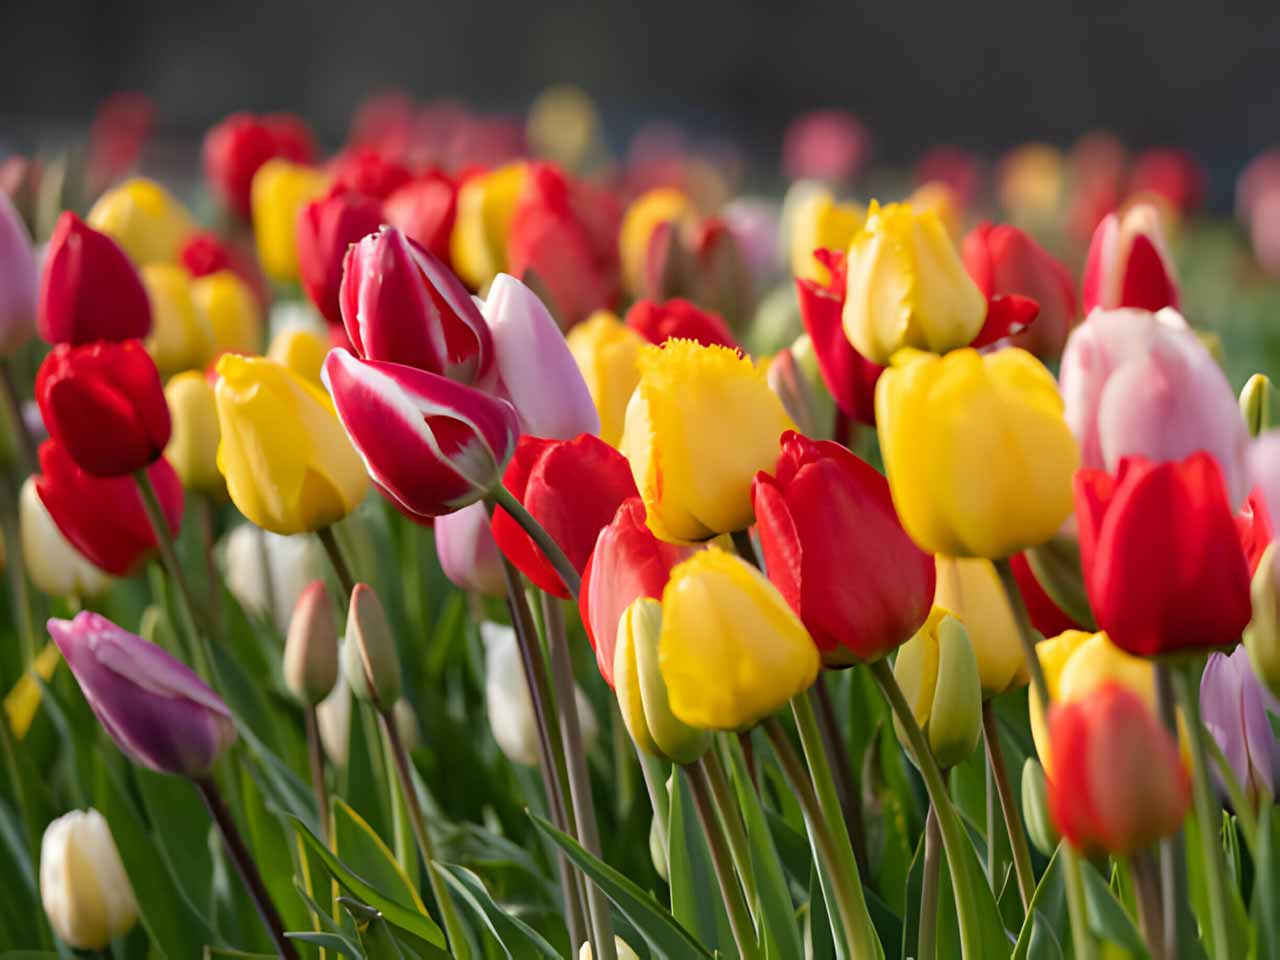 Colorful tulip blossoms in a field